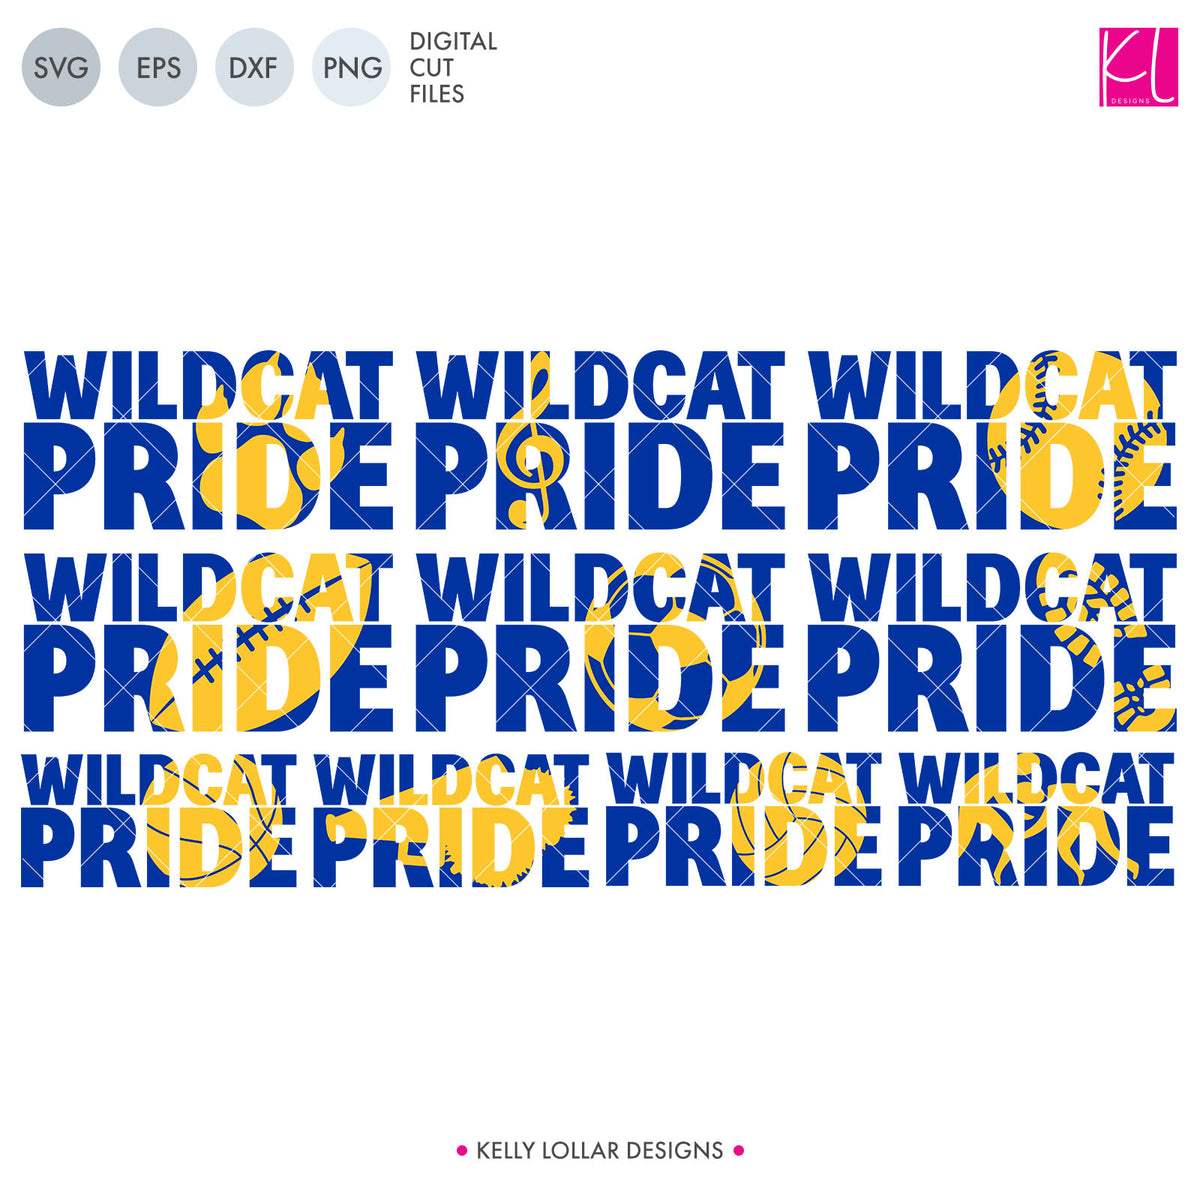 Wildcats Mascot Bundle | SVG DXF EPS PNG Cut Files